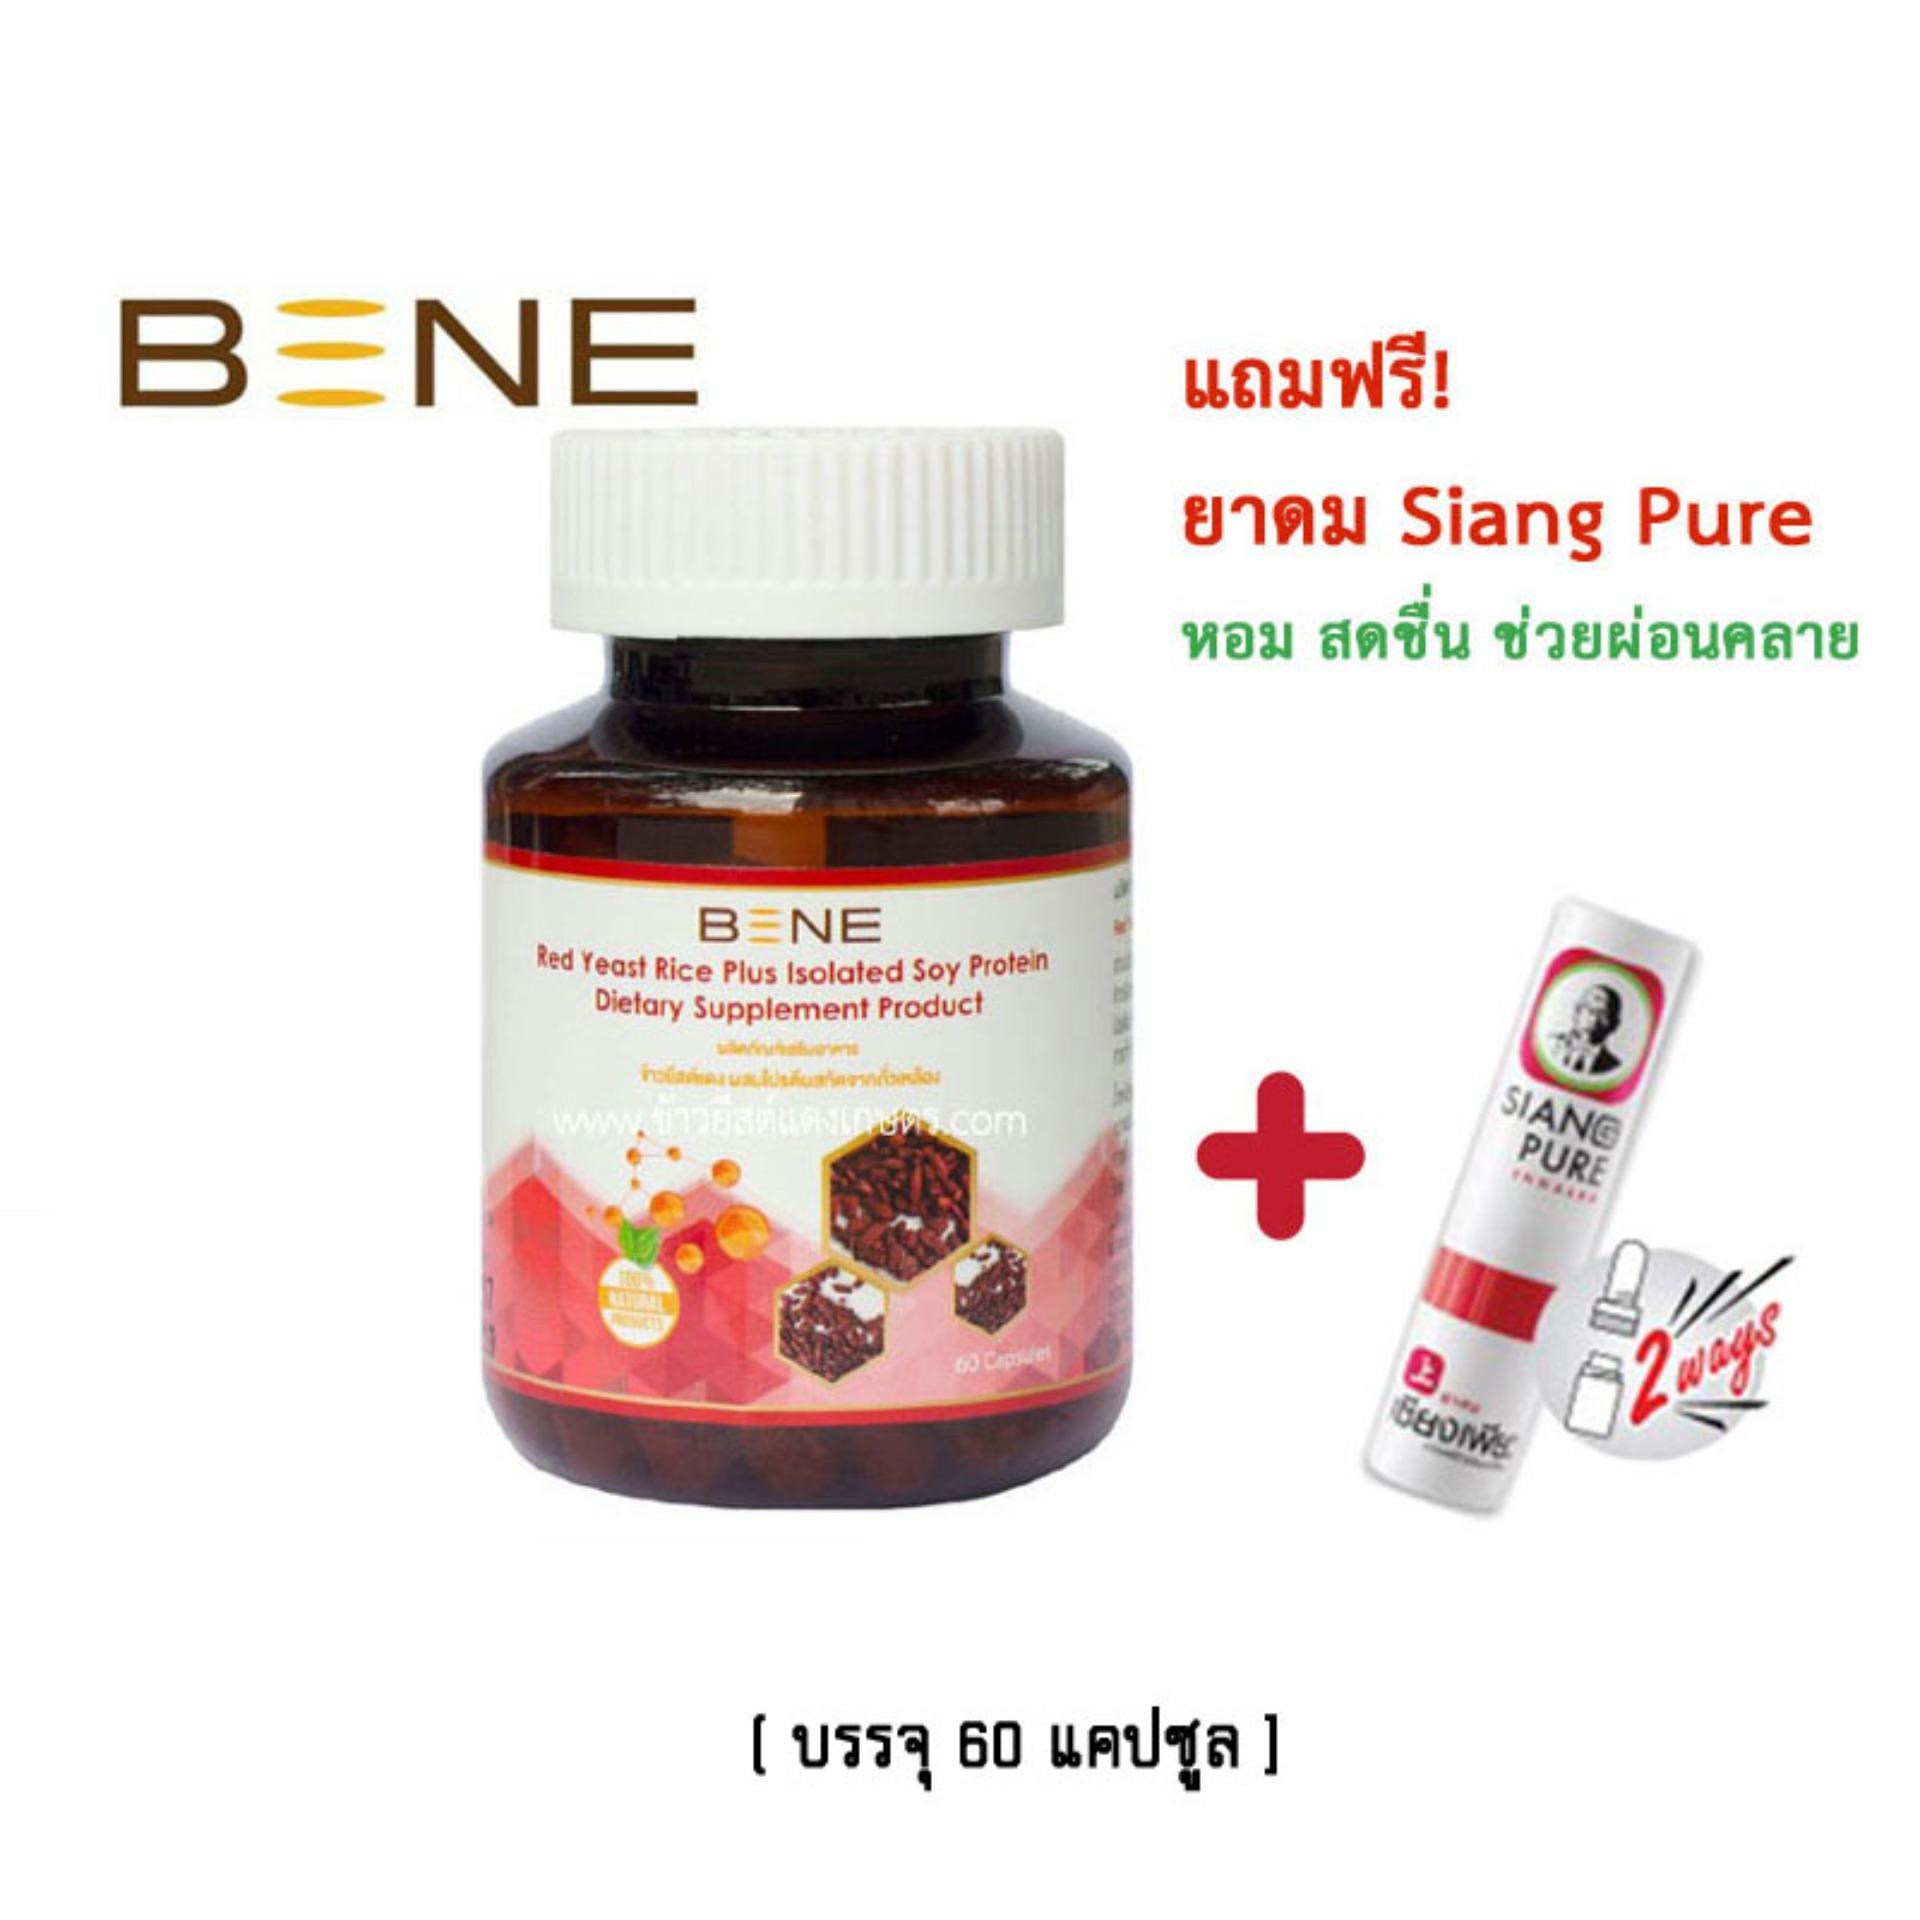 BENE ข้าวยีสต์แดง งานวิจัย ม.เกษตร Red yeast จำนวน 1 กระปุก (60 แคปซูล) + แถม ยาดมเซียงเพียว Siang Pure